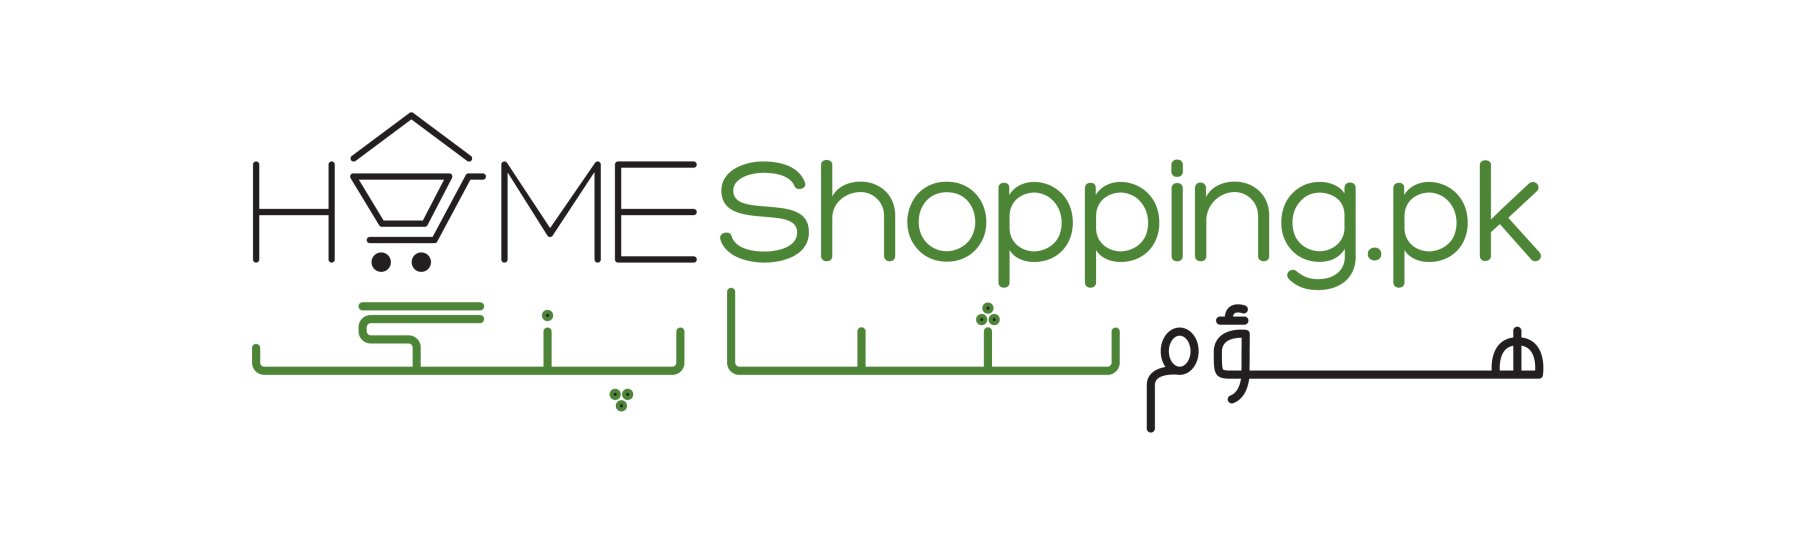 HomeShopping to rebrand Here s the new logo 